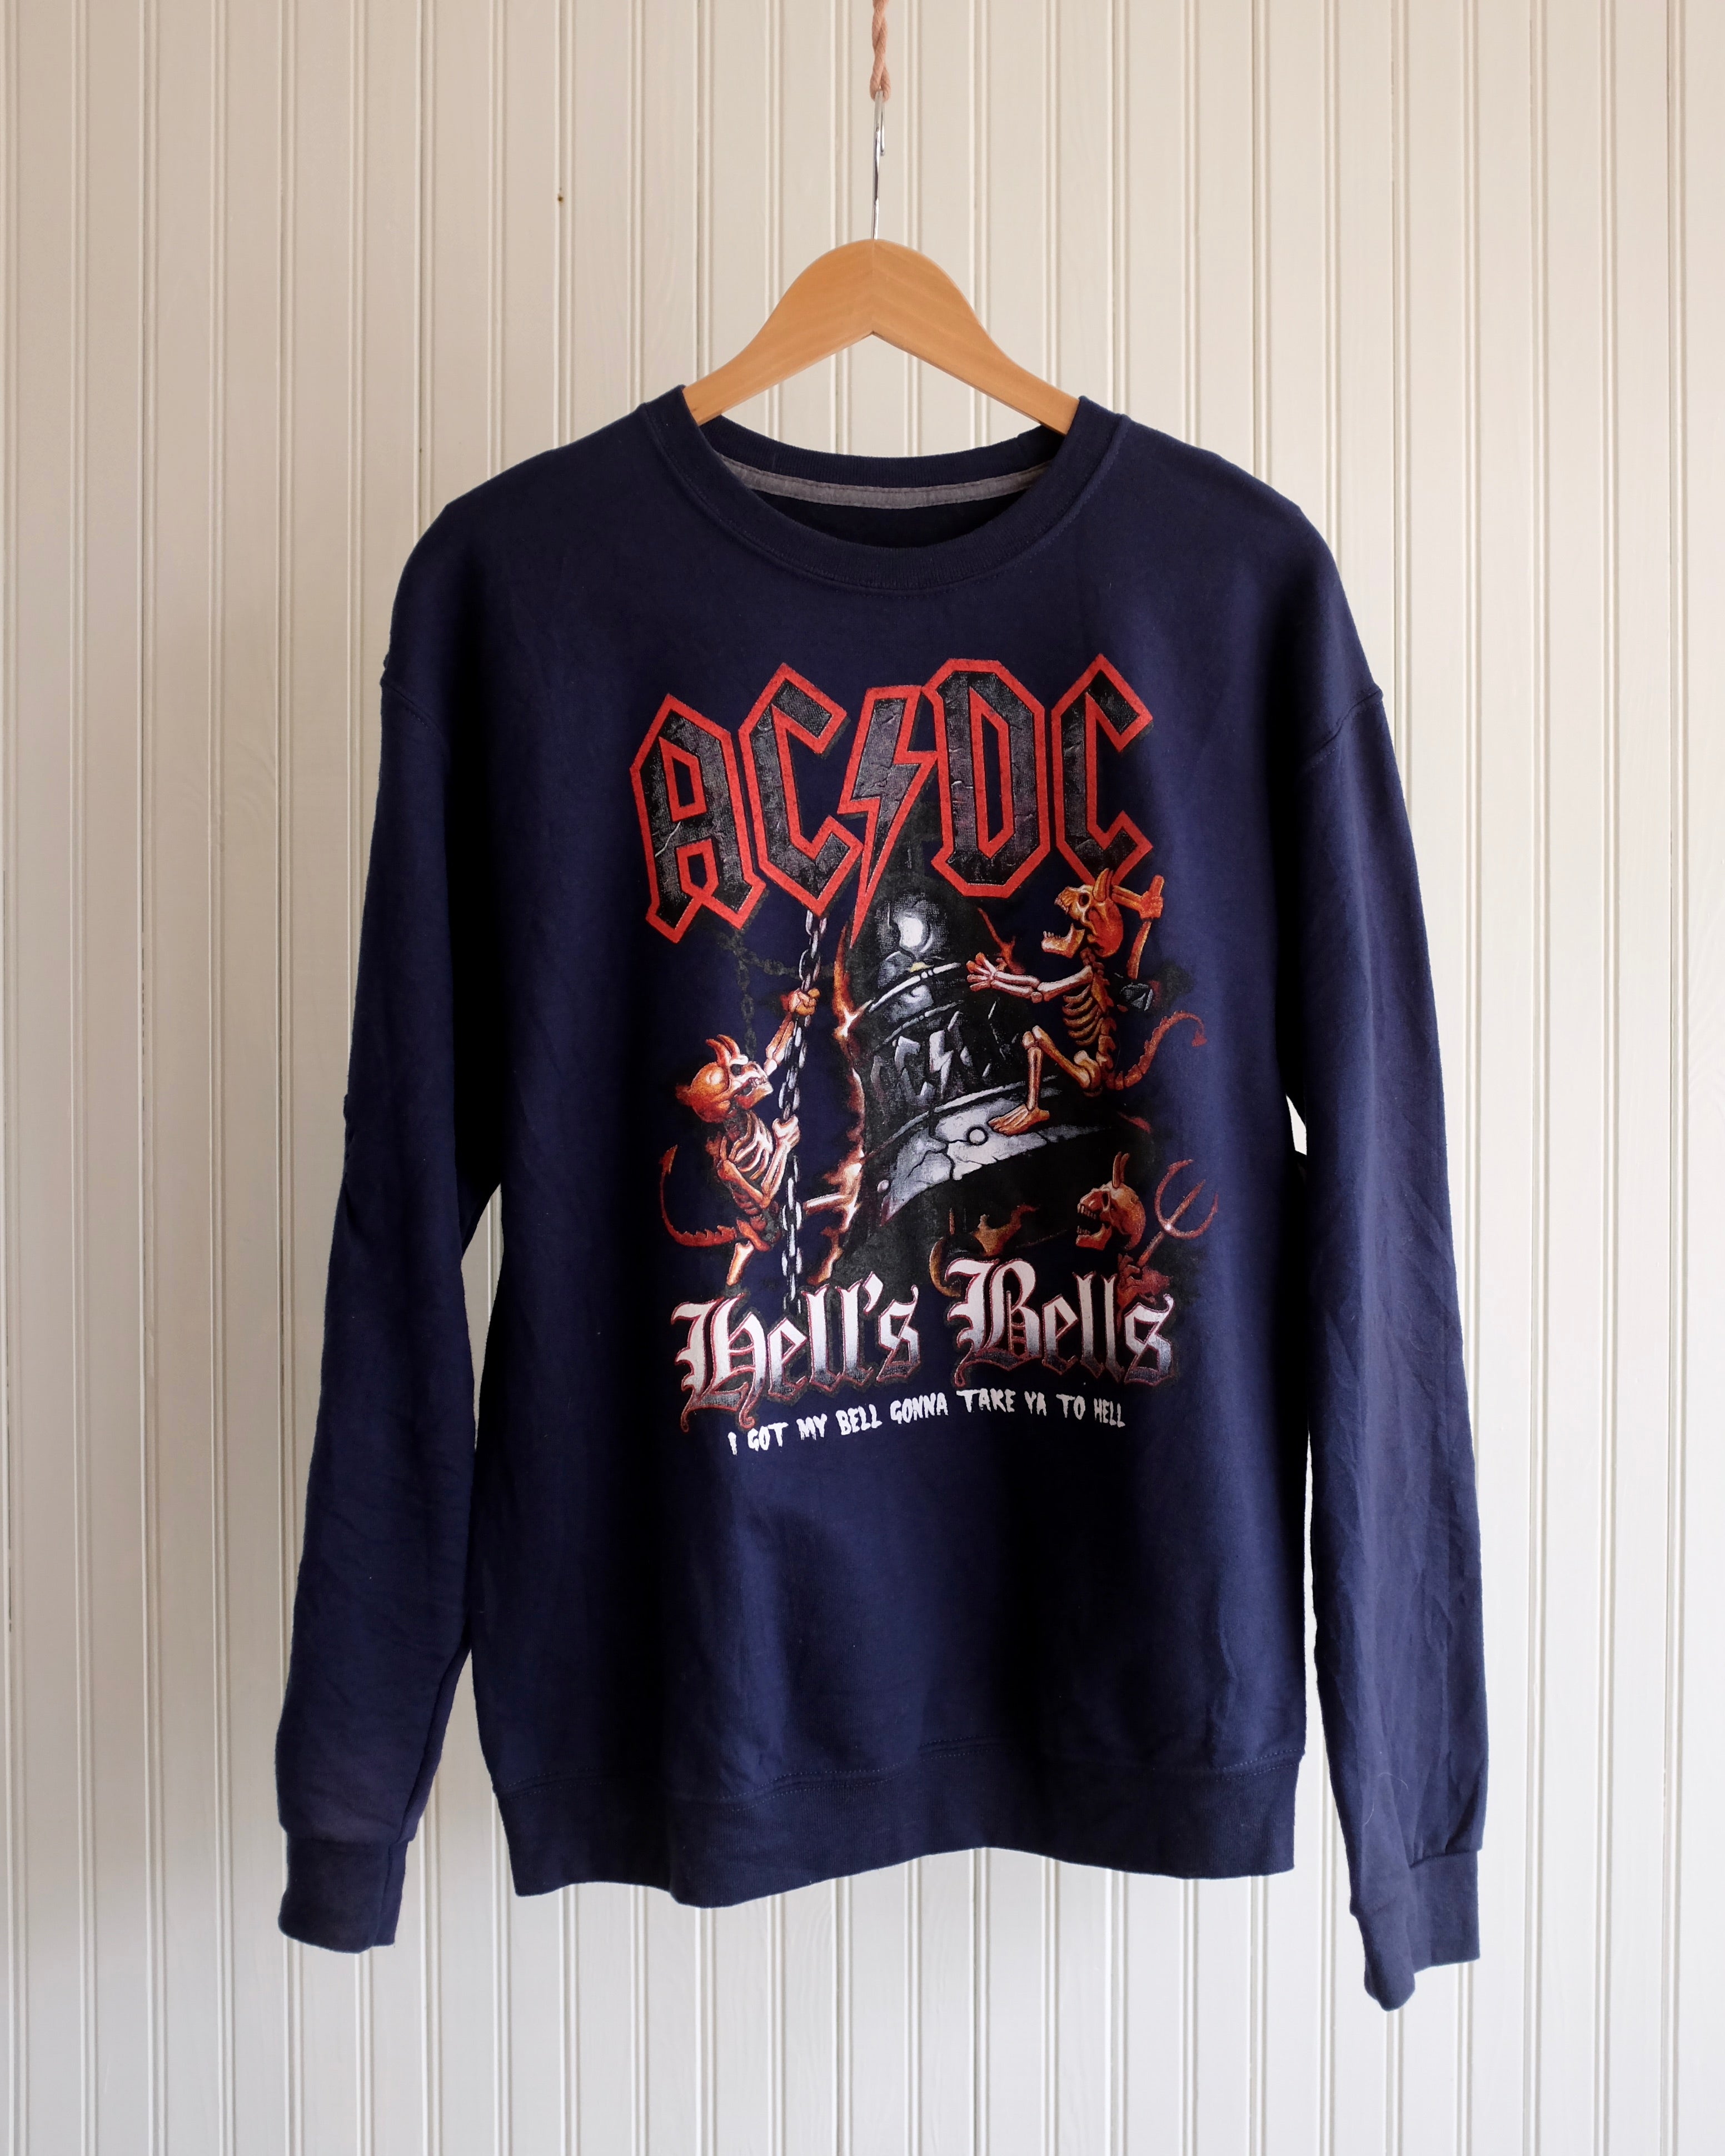 AC/DC Hells Bells Sweatshirts - Mix